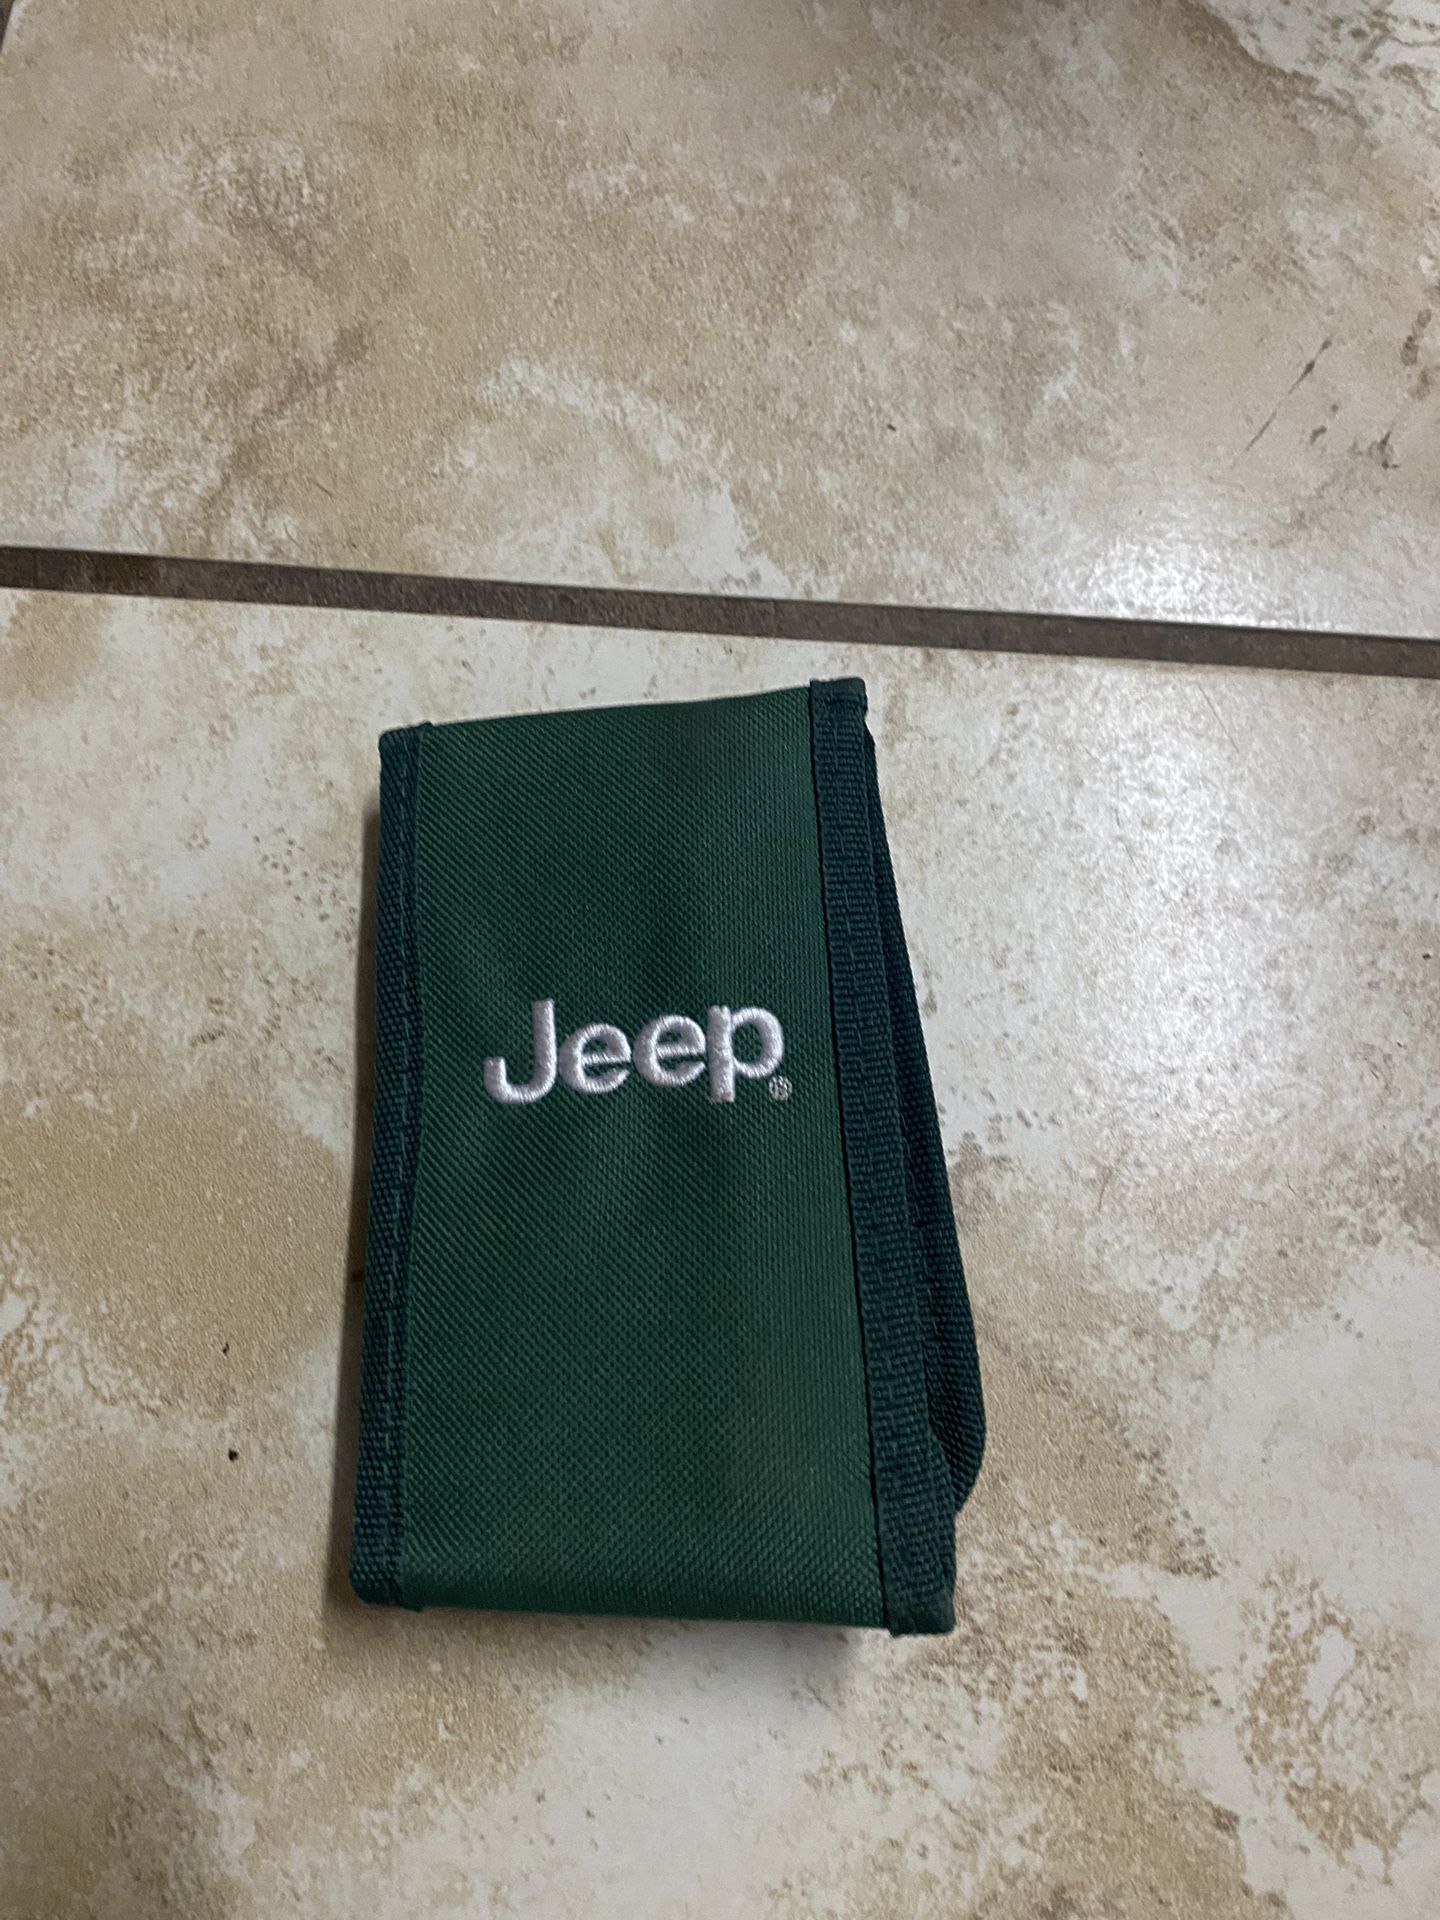 JEEP WRANGLER JK Hard Top Soft Top and Door Removal TOOL Kit NEW OEM MOPAR